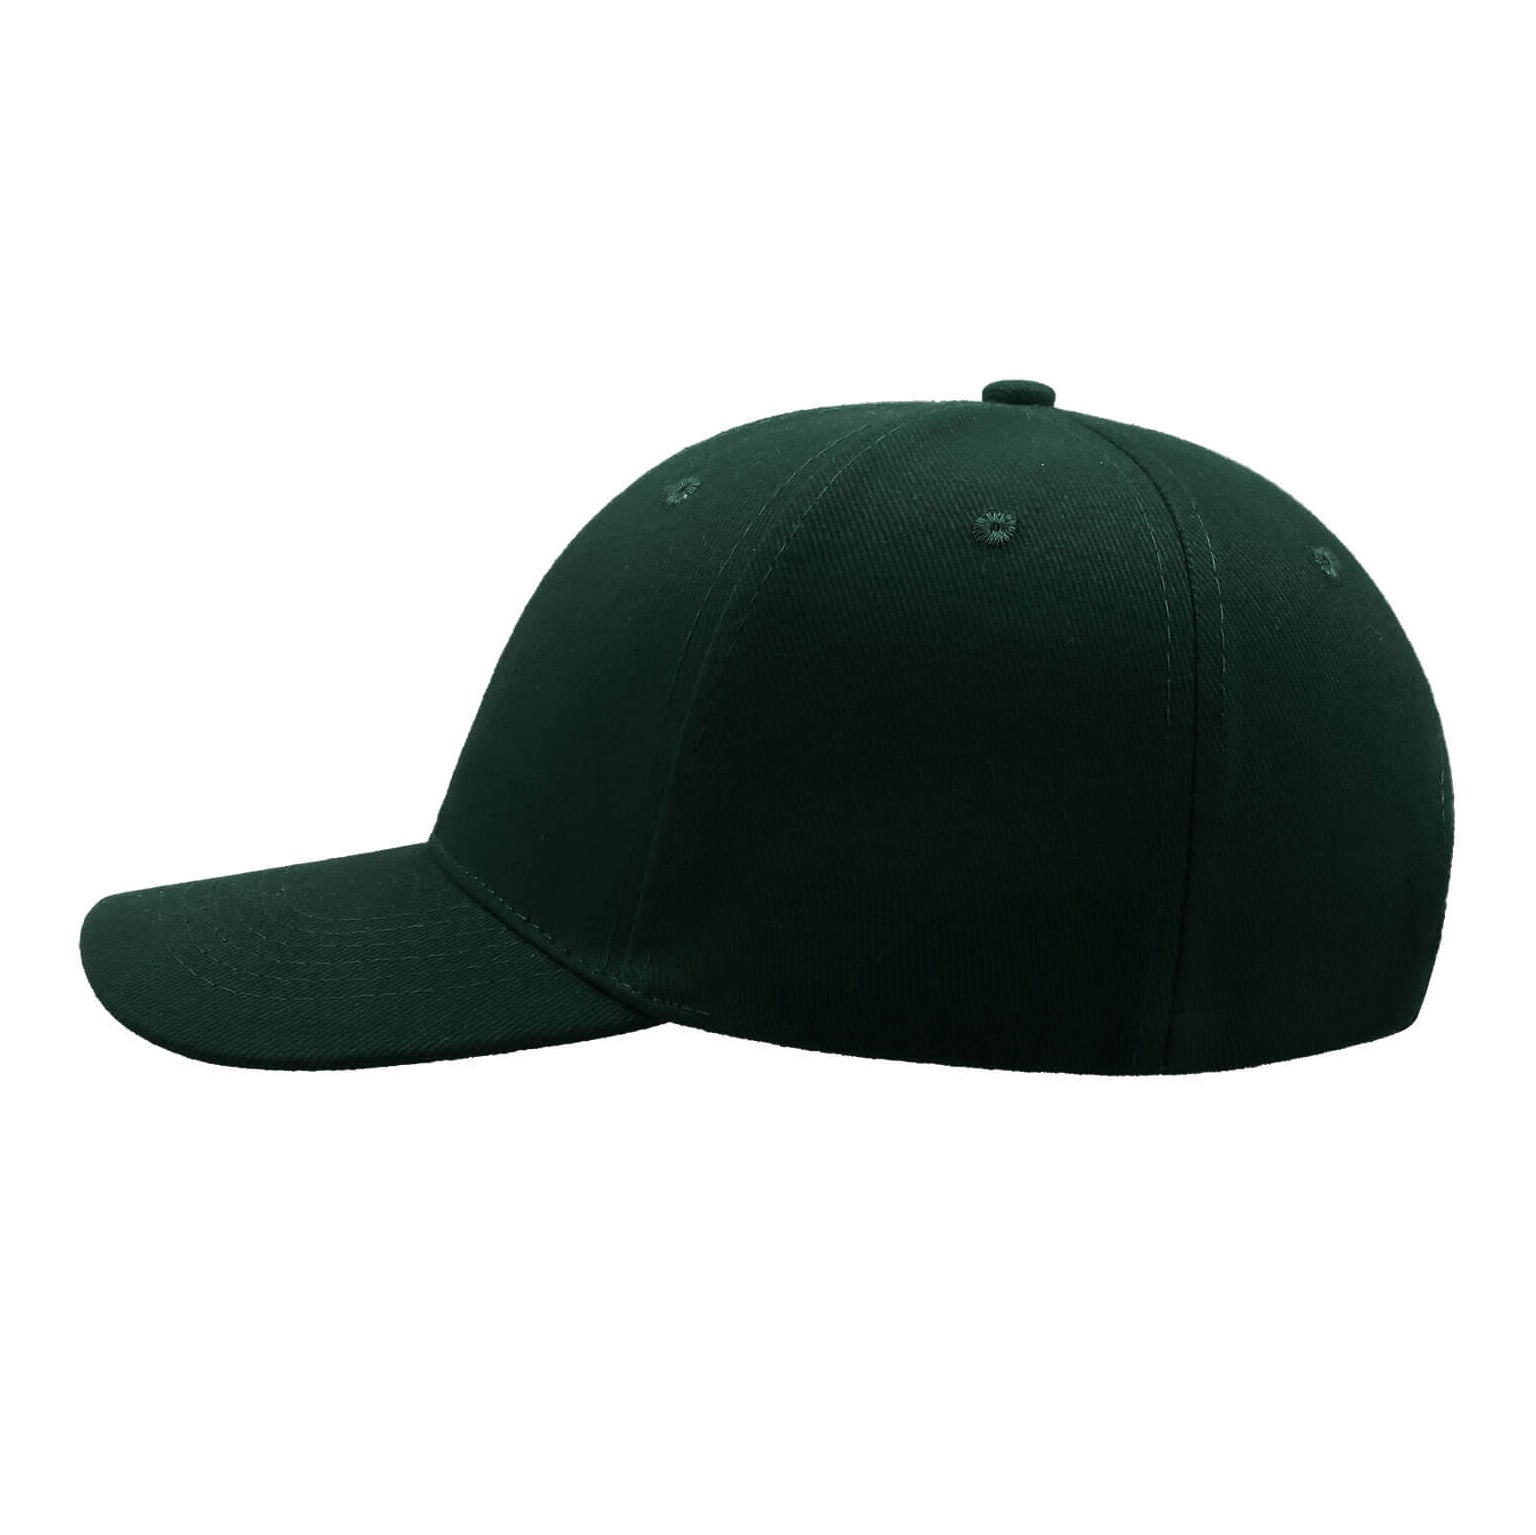 Fra 10 stk. | Liberty Six Buckle cap med logo brodering | 8 Farver